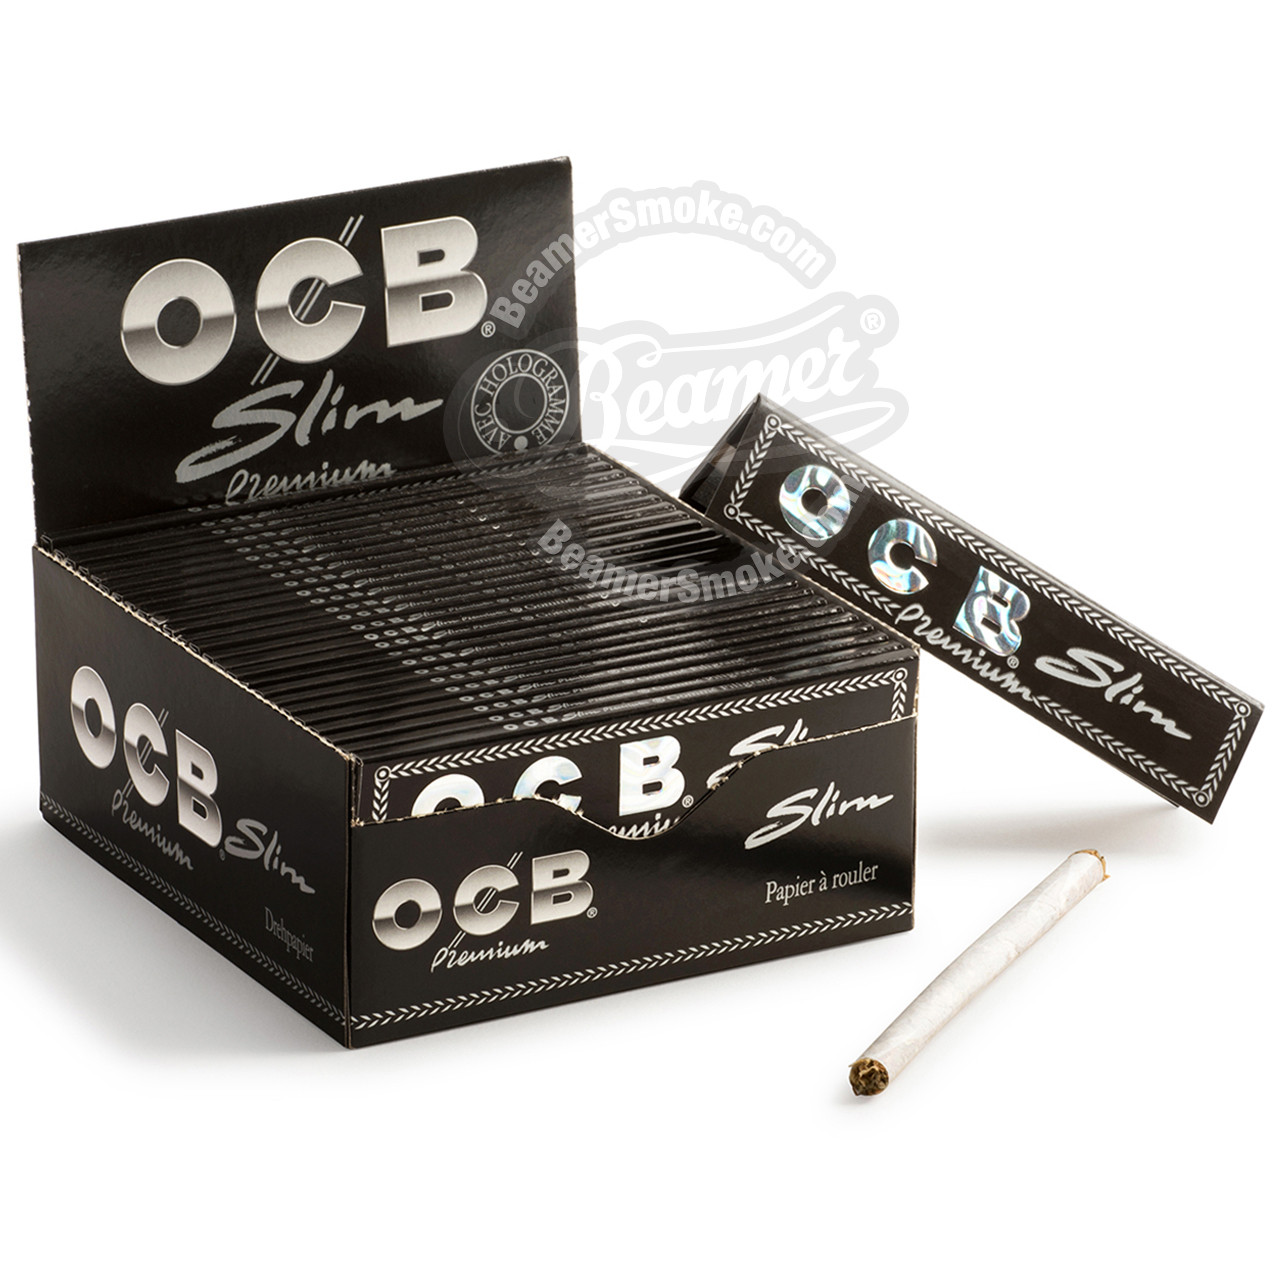 OCB Black Premium Rolls - Wise Skies